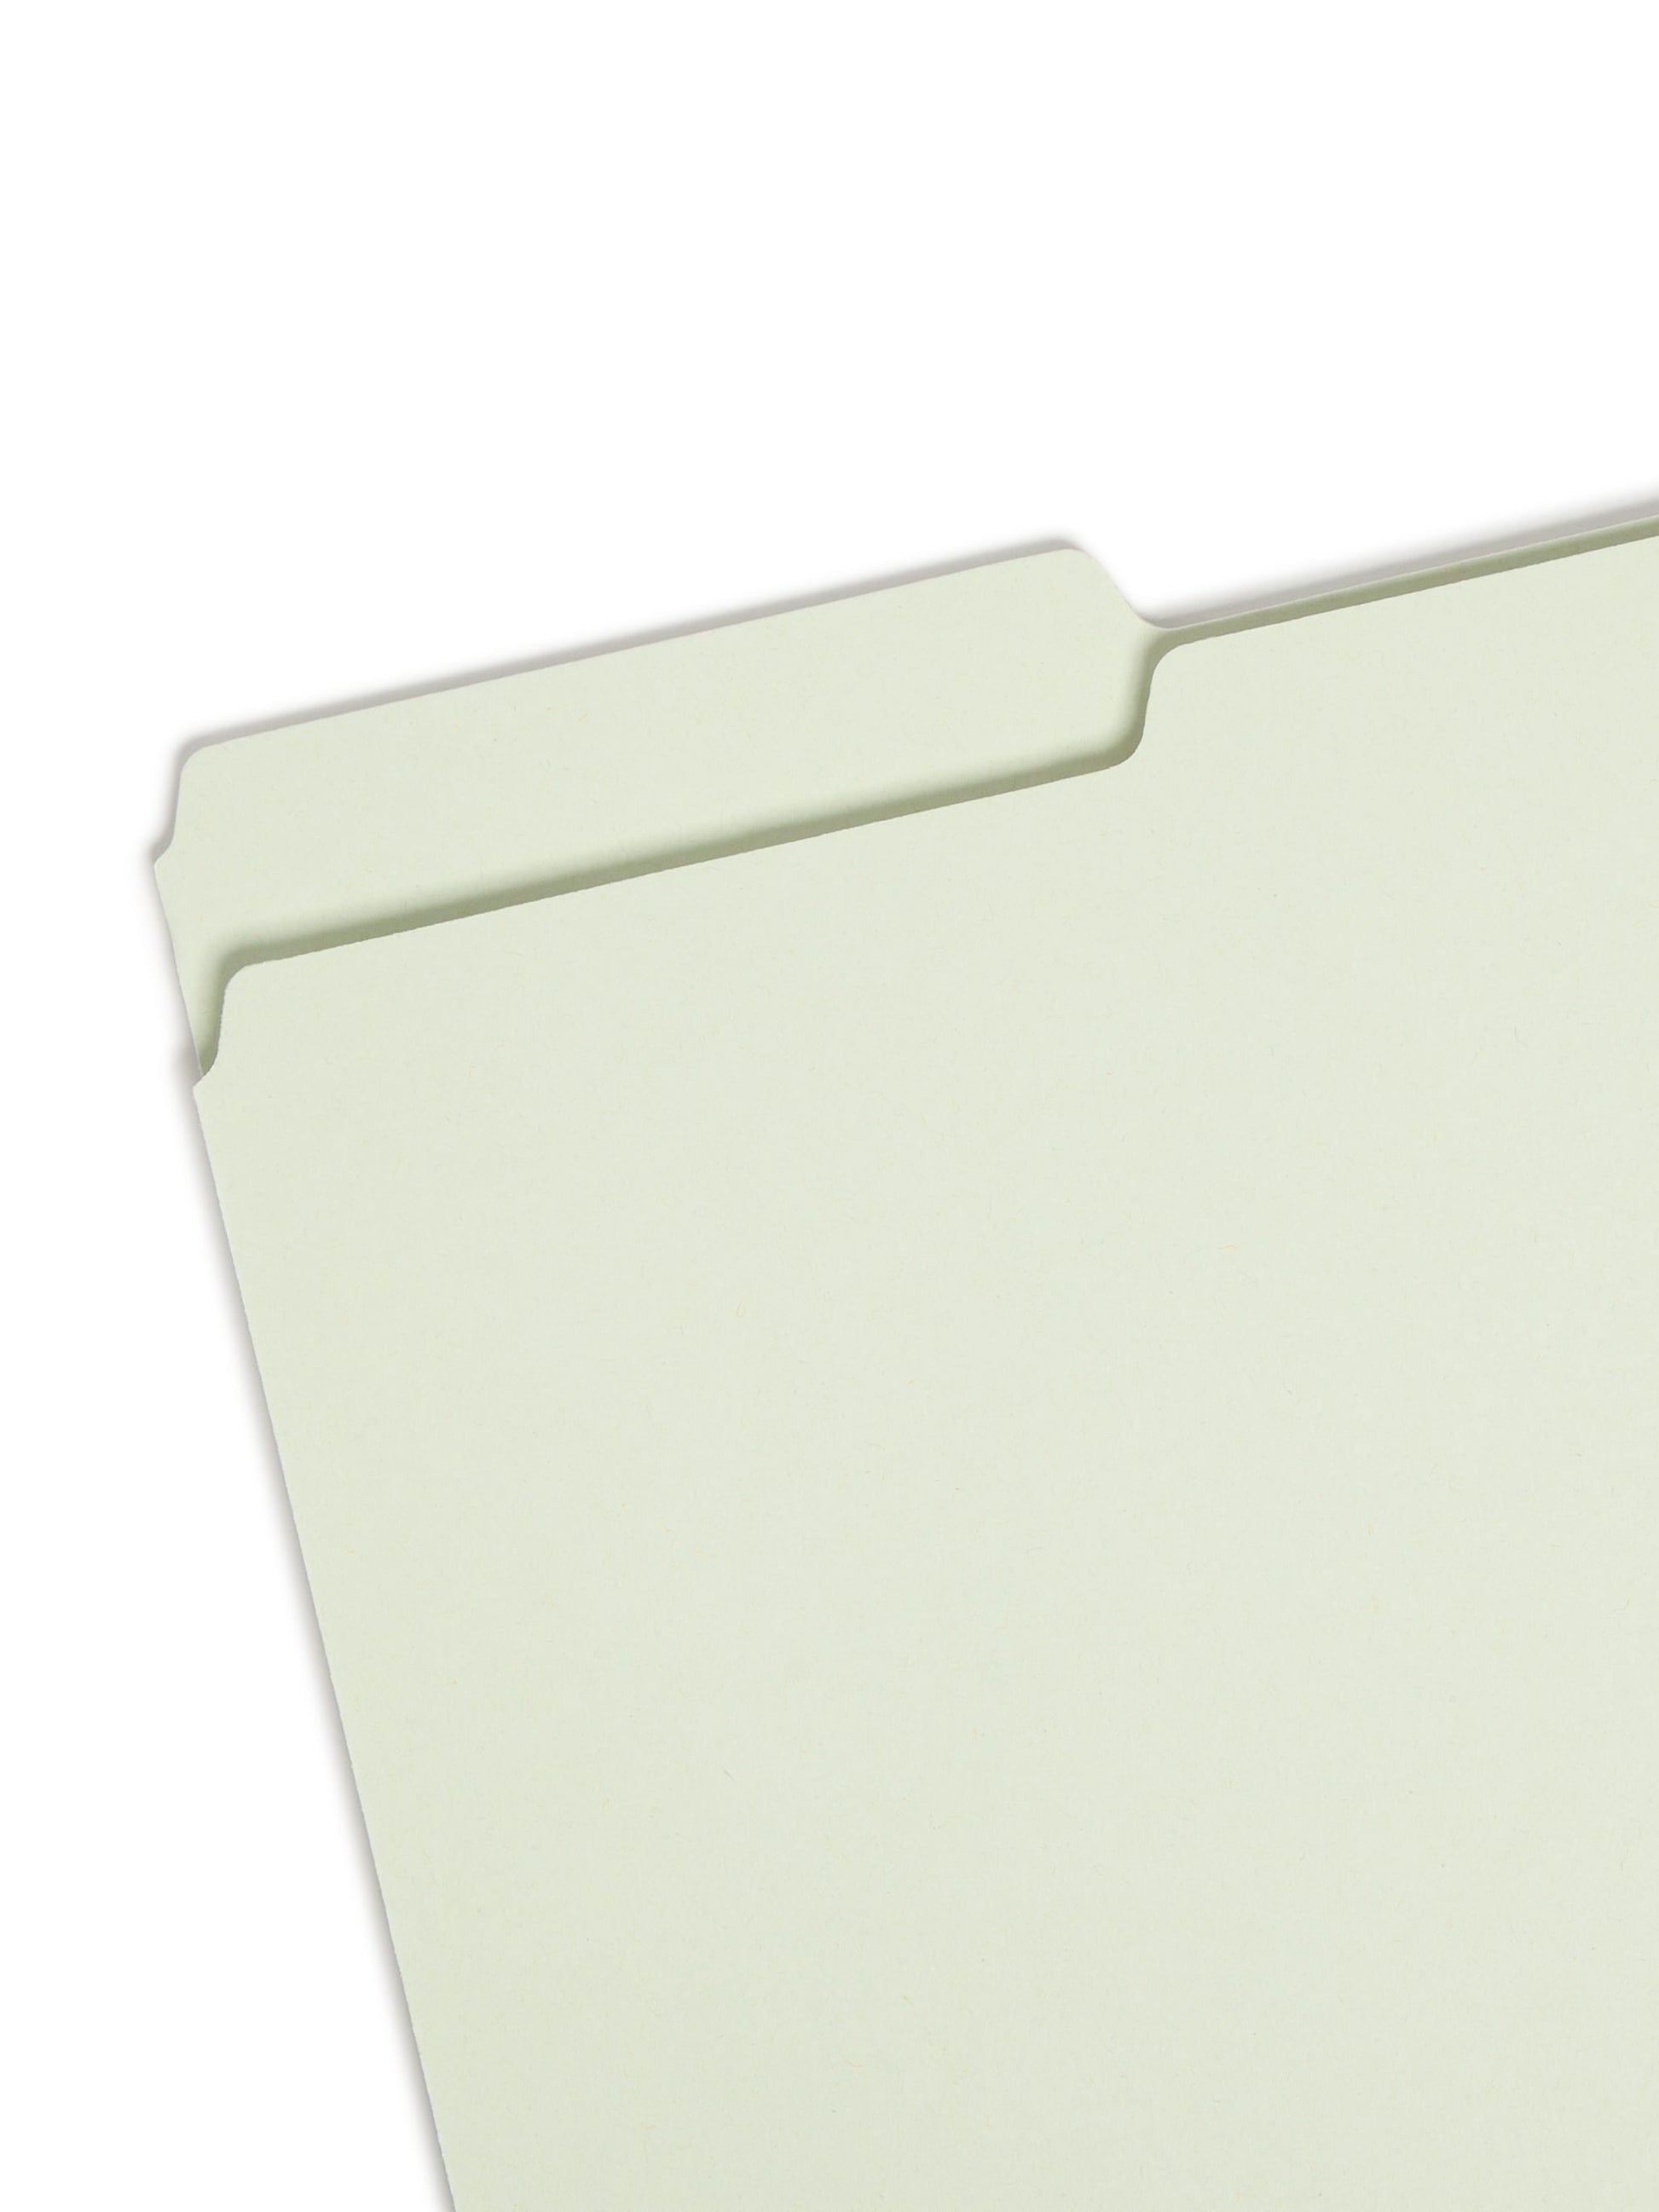 Pressboard File Folder, 1 inch Expansion, 1/3-Cut Tab, Gray/Green Color, Legal Size, Set of 25, 086486182300